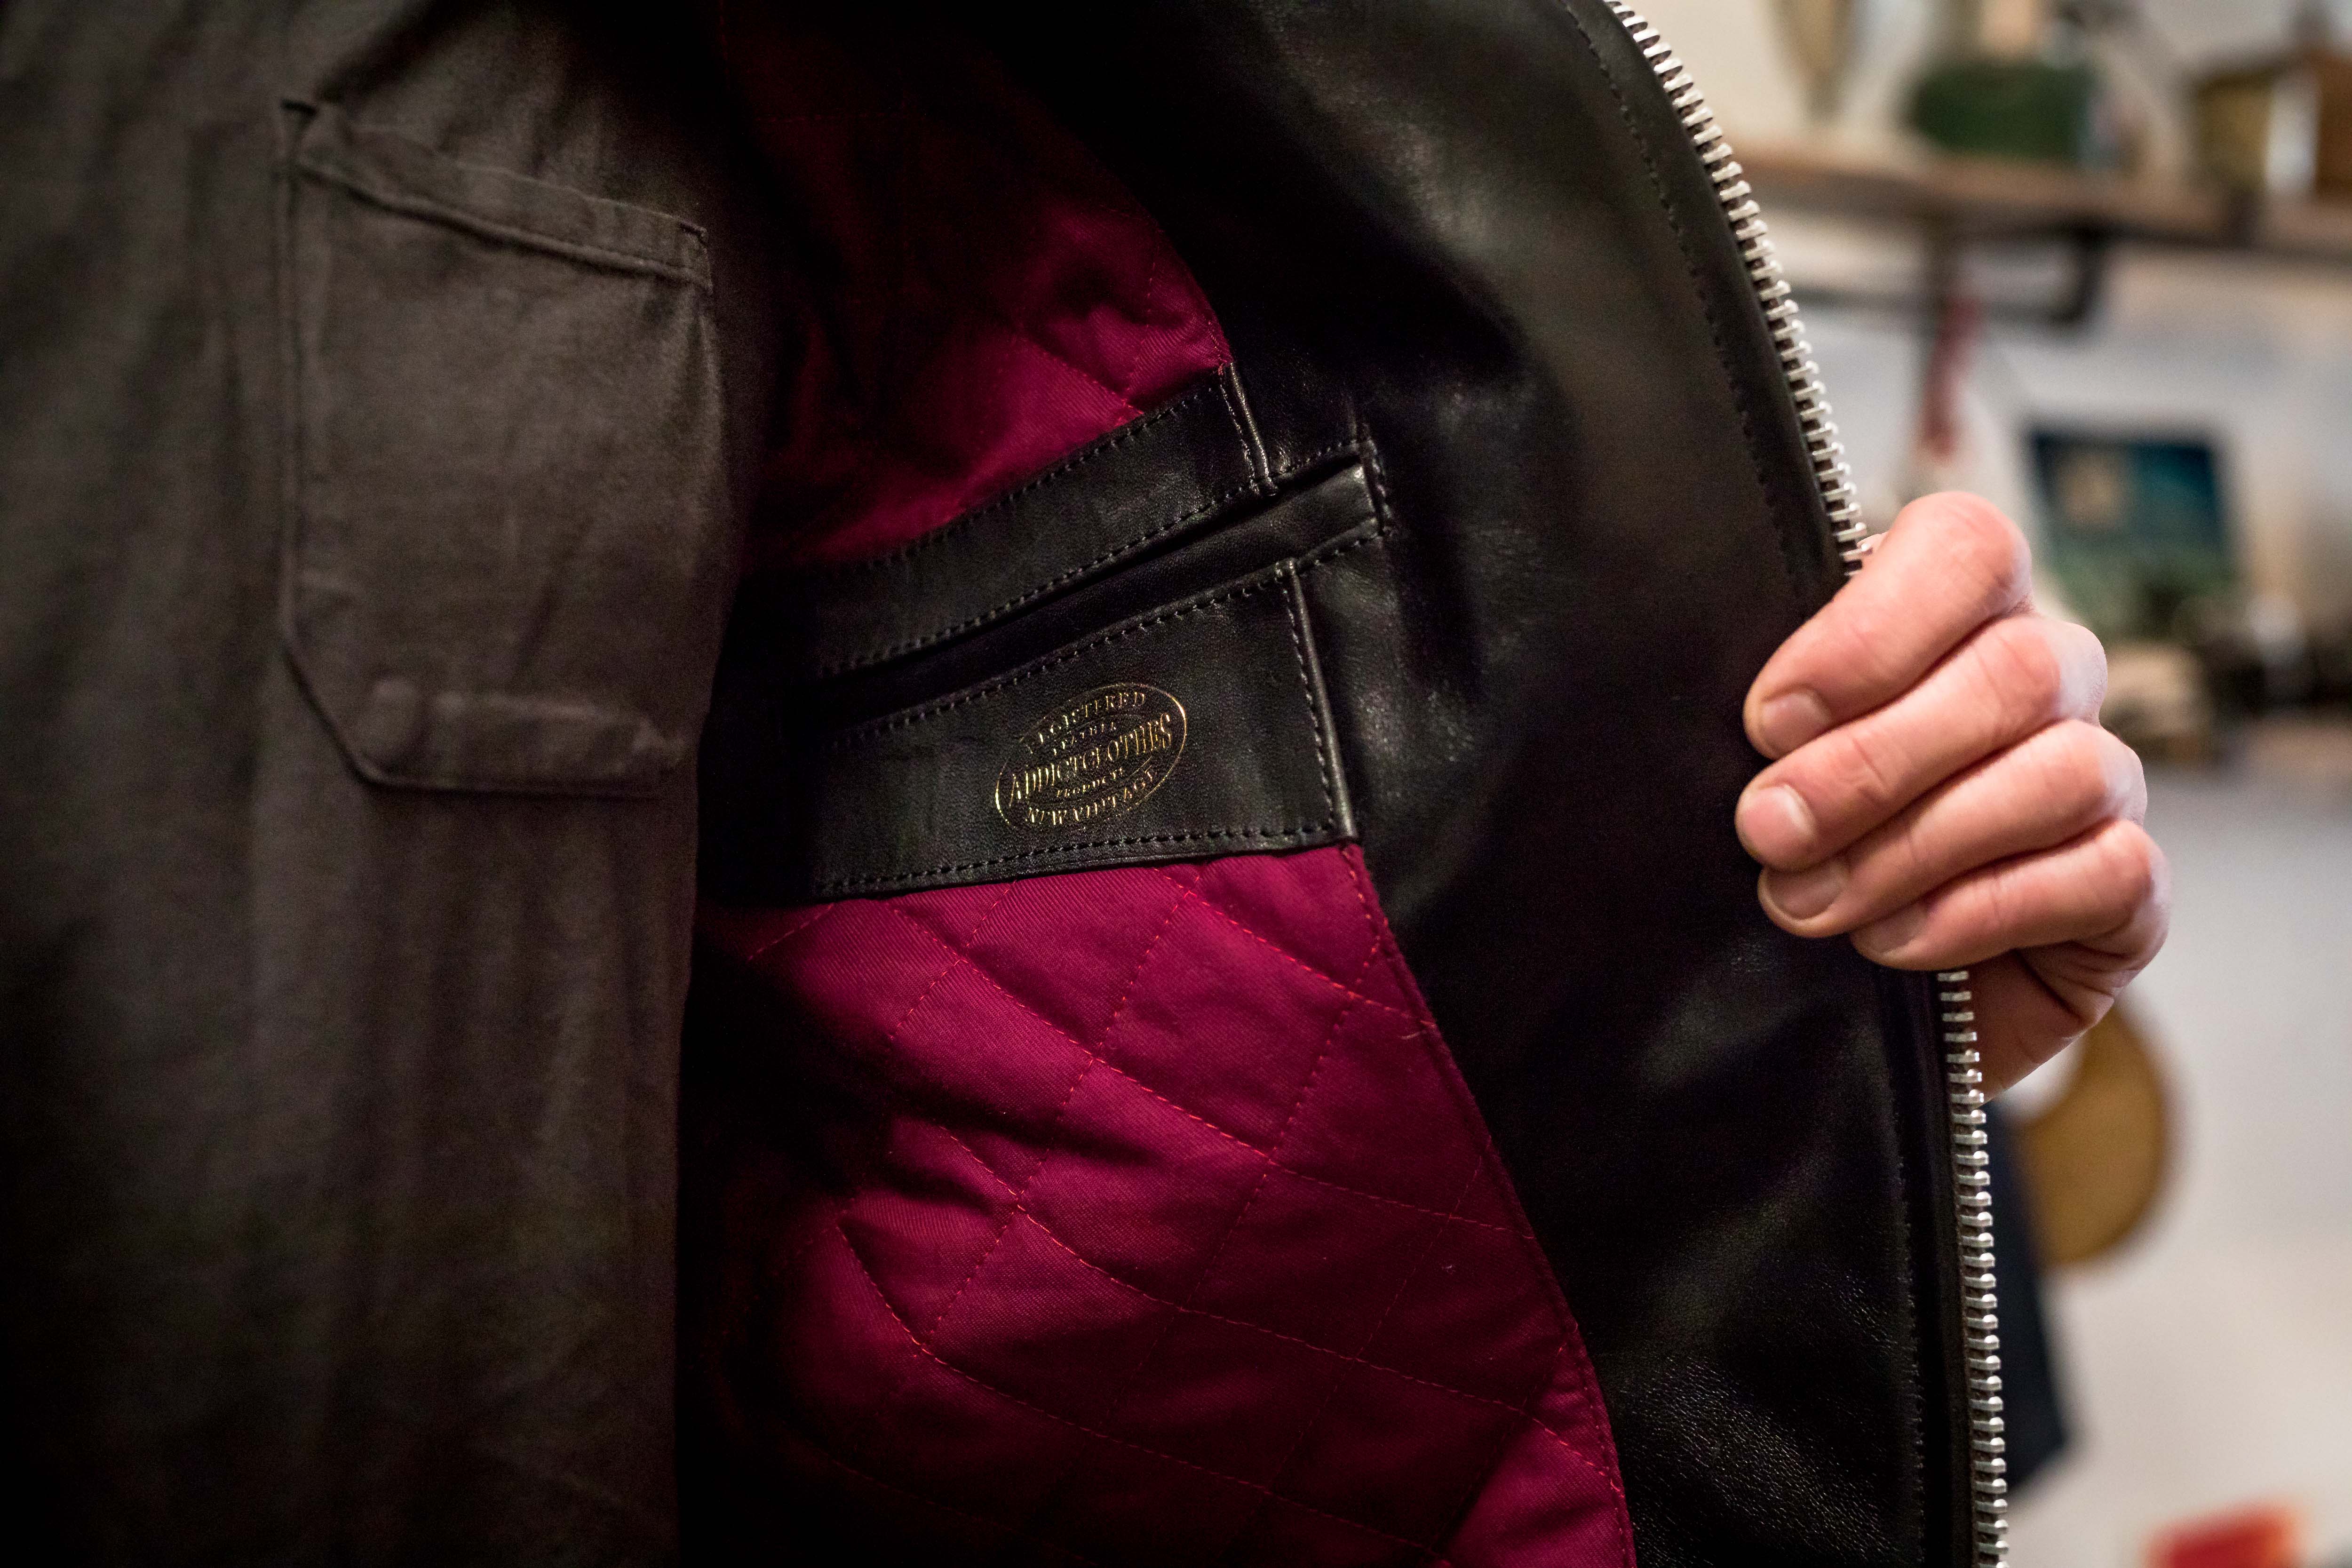 ADDICT Clothes - British Asymmetry Jacket - Sheepskin Leather